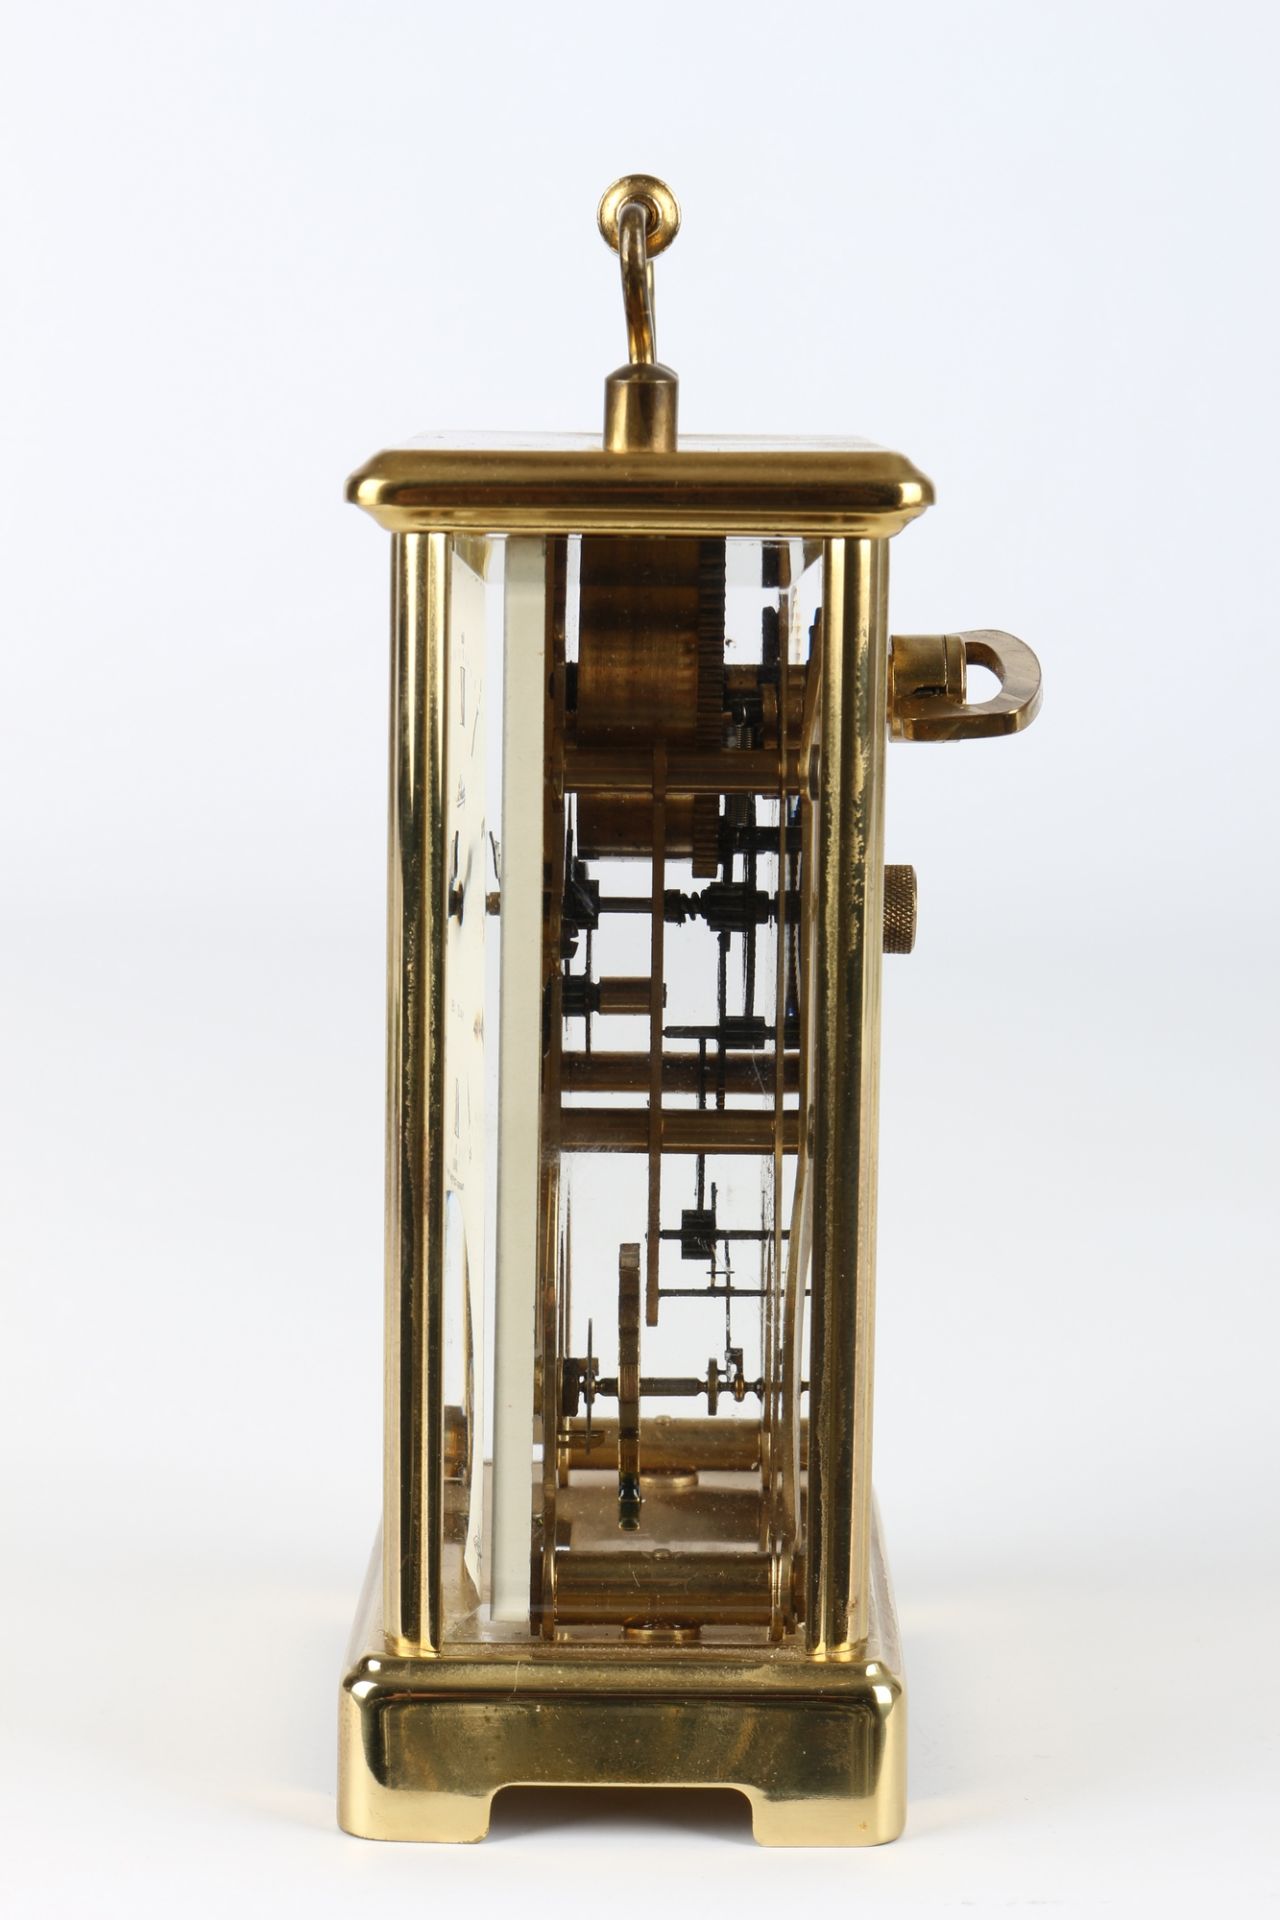 August Schatz Reiseuhr, carriage clock, - Image 2 of 5